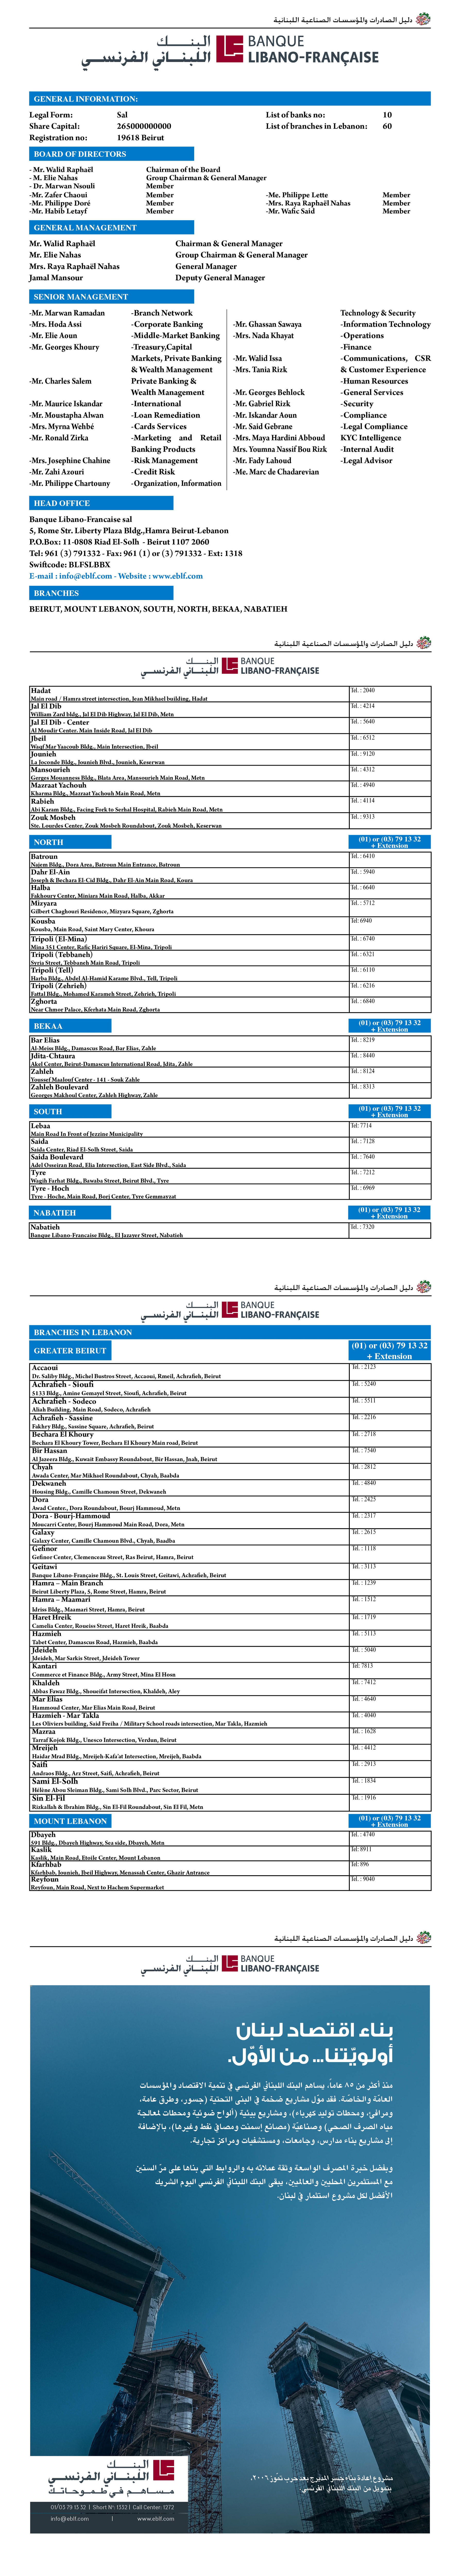 Lebanon Industry List Of Lebanon Industries List Of Insurance And Bank Companies In Lebanon Made In Lebanon Harmonized Code Commodity Lebanon دليل الصادرات والمؤسسات الصناعية اللبنانية